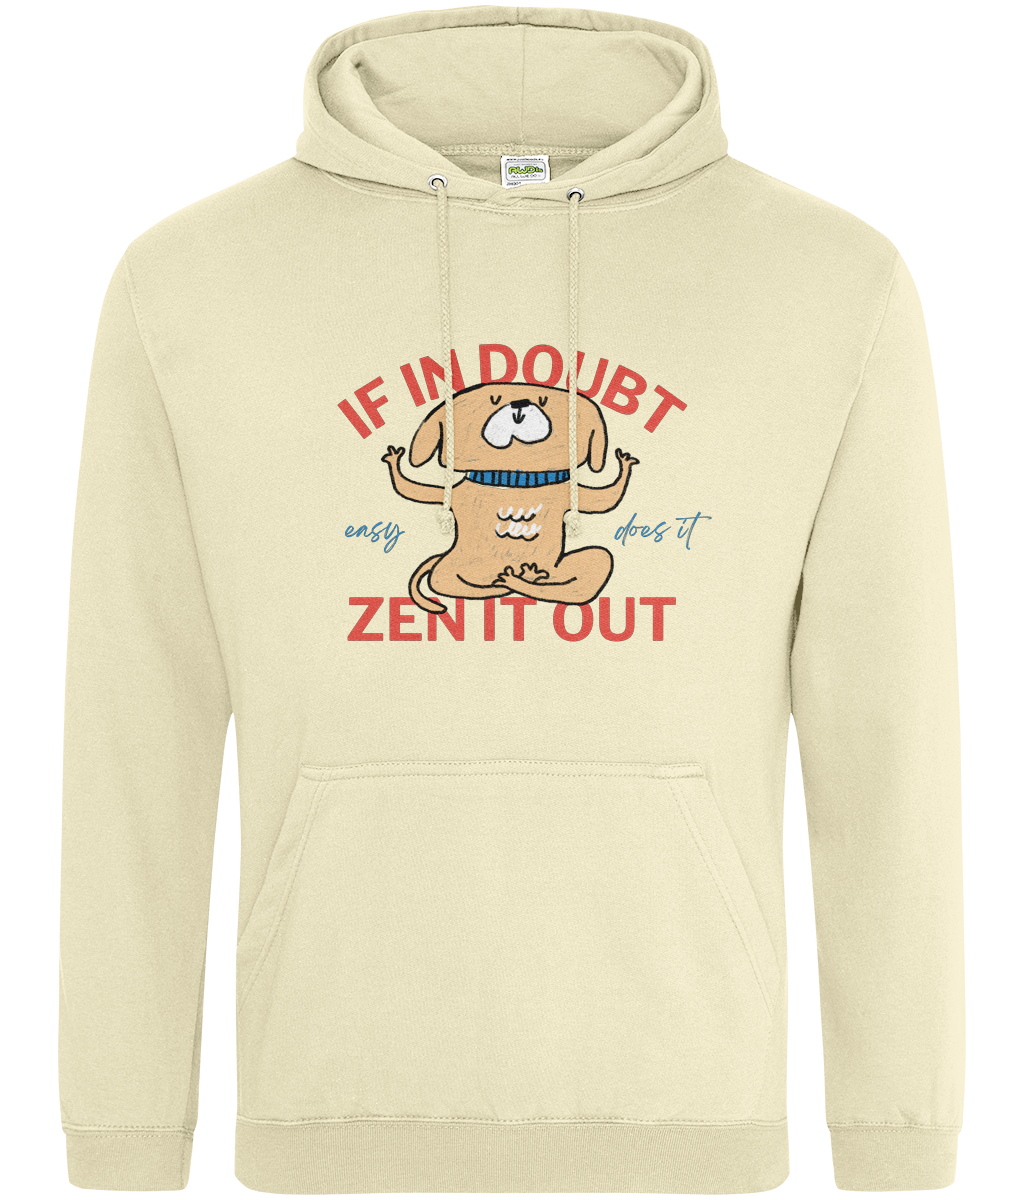 If In Doubt Zen It Out | Hoodie